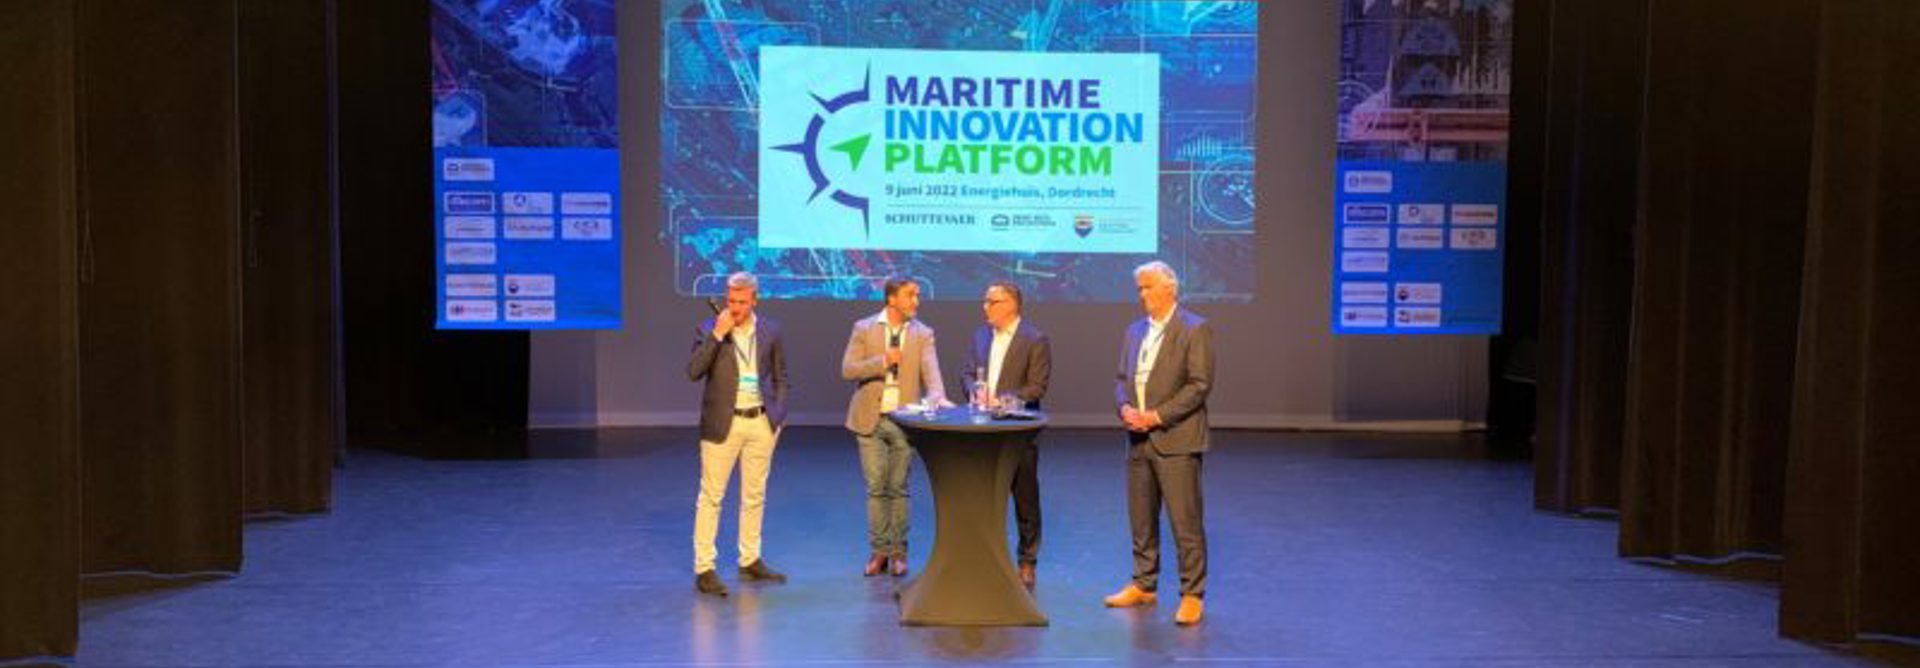 Maritime Innovation Platform 1 800X280